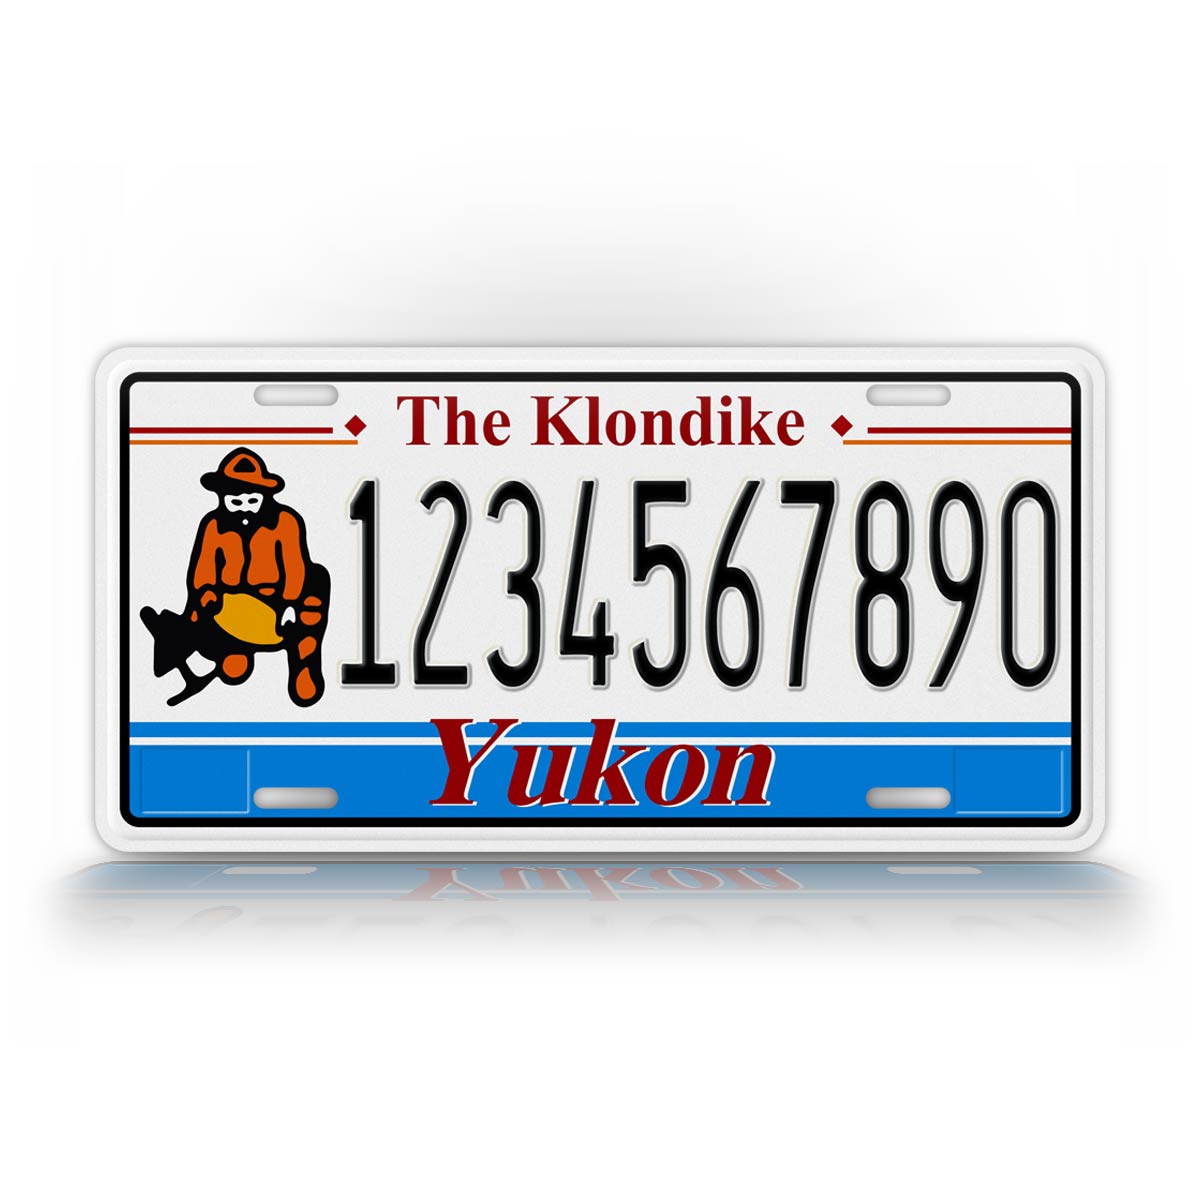 Personalized Text Yukon Canada The Klondike License Plate